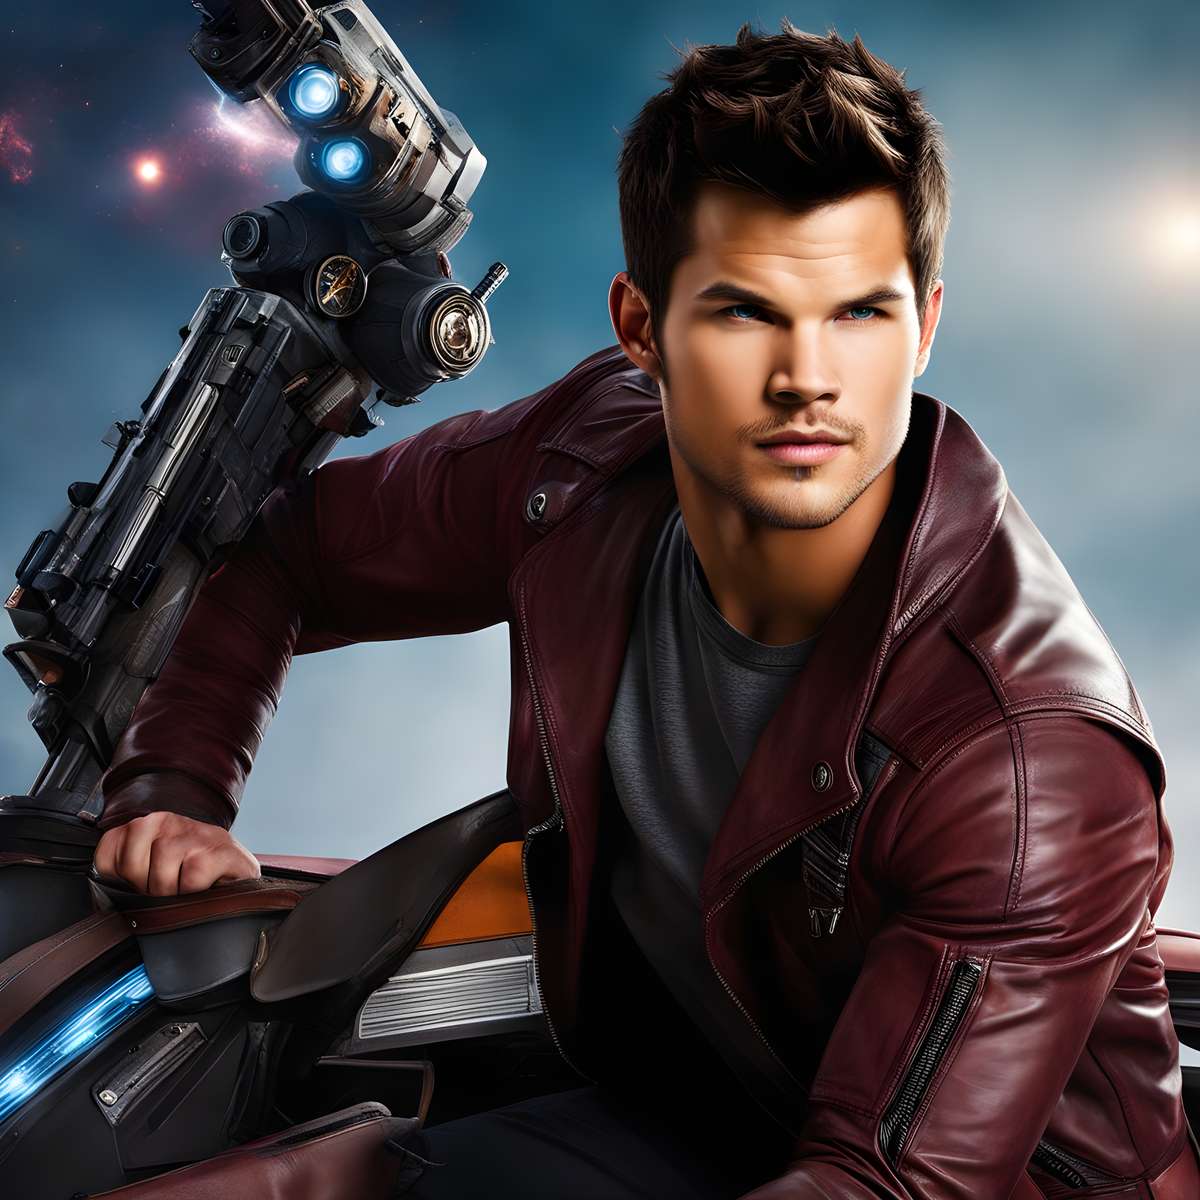 Taylor Lautner nel ruolo di Star Lord puzzle online